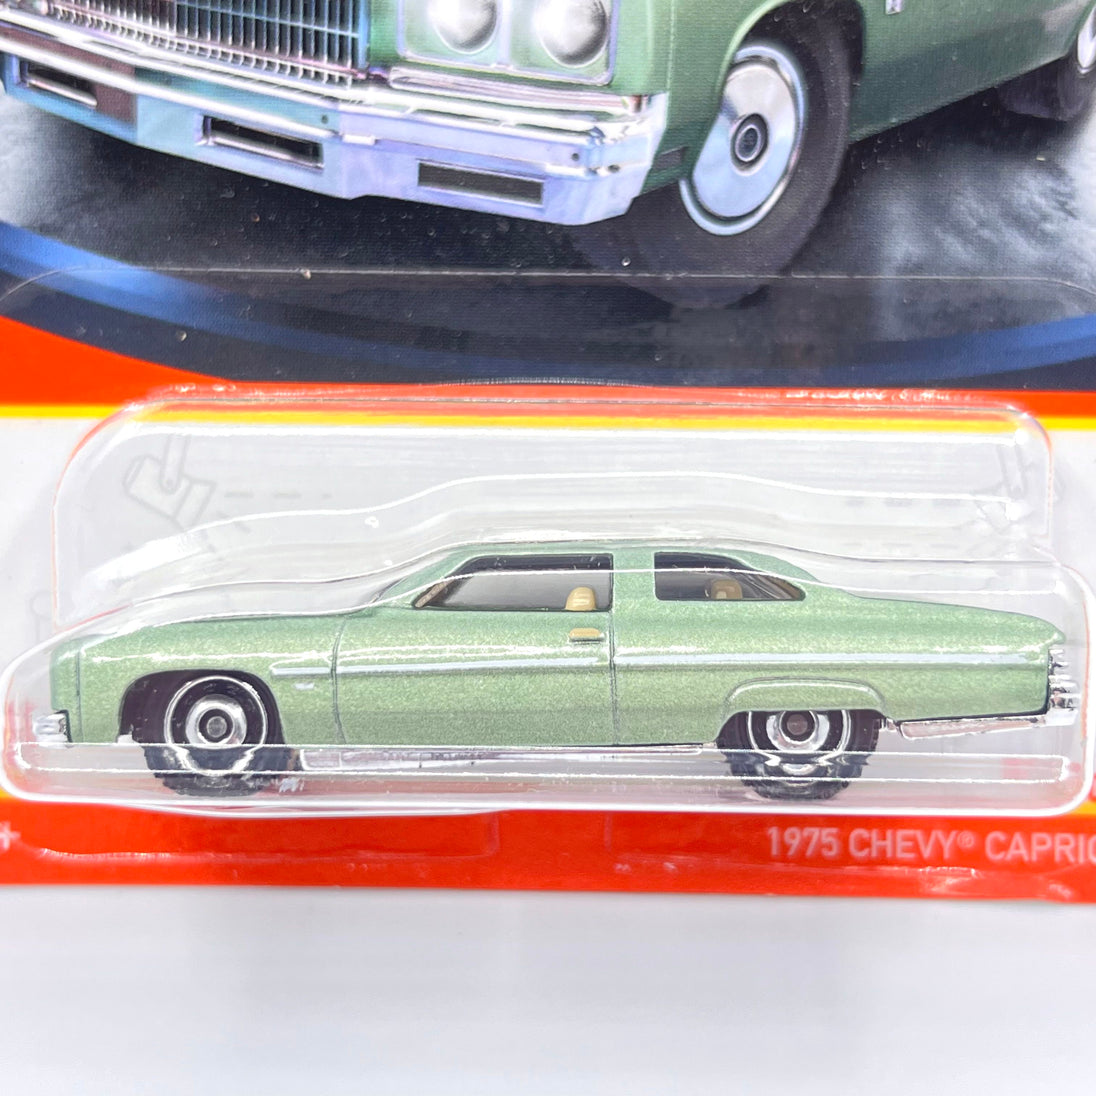 1975 Chevy Caprice Rare MatchBox Alloy Diecast Car Model